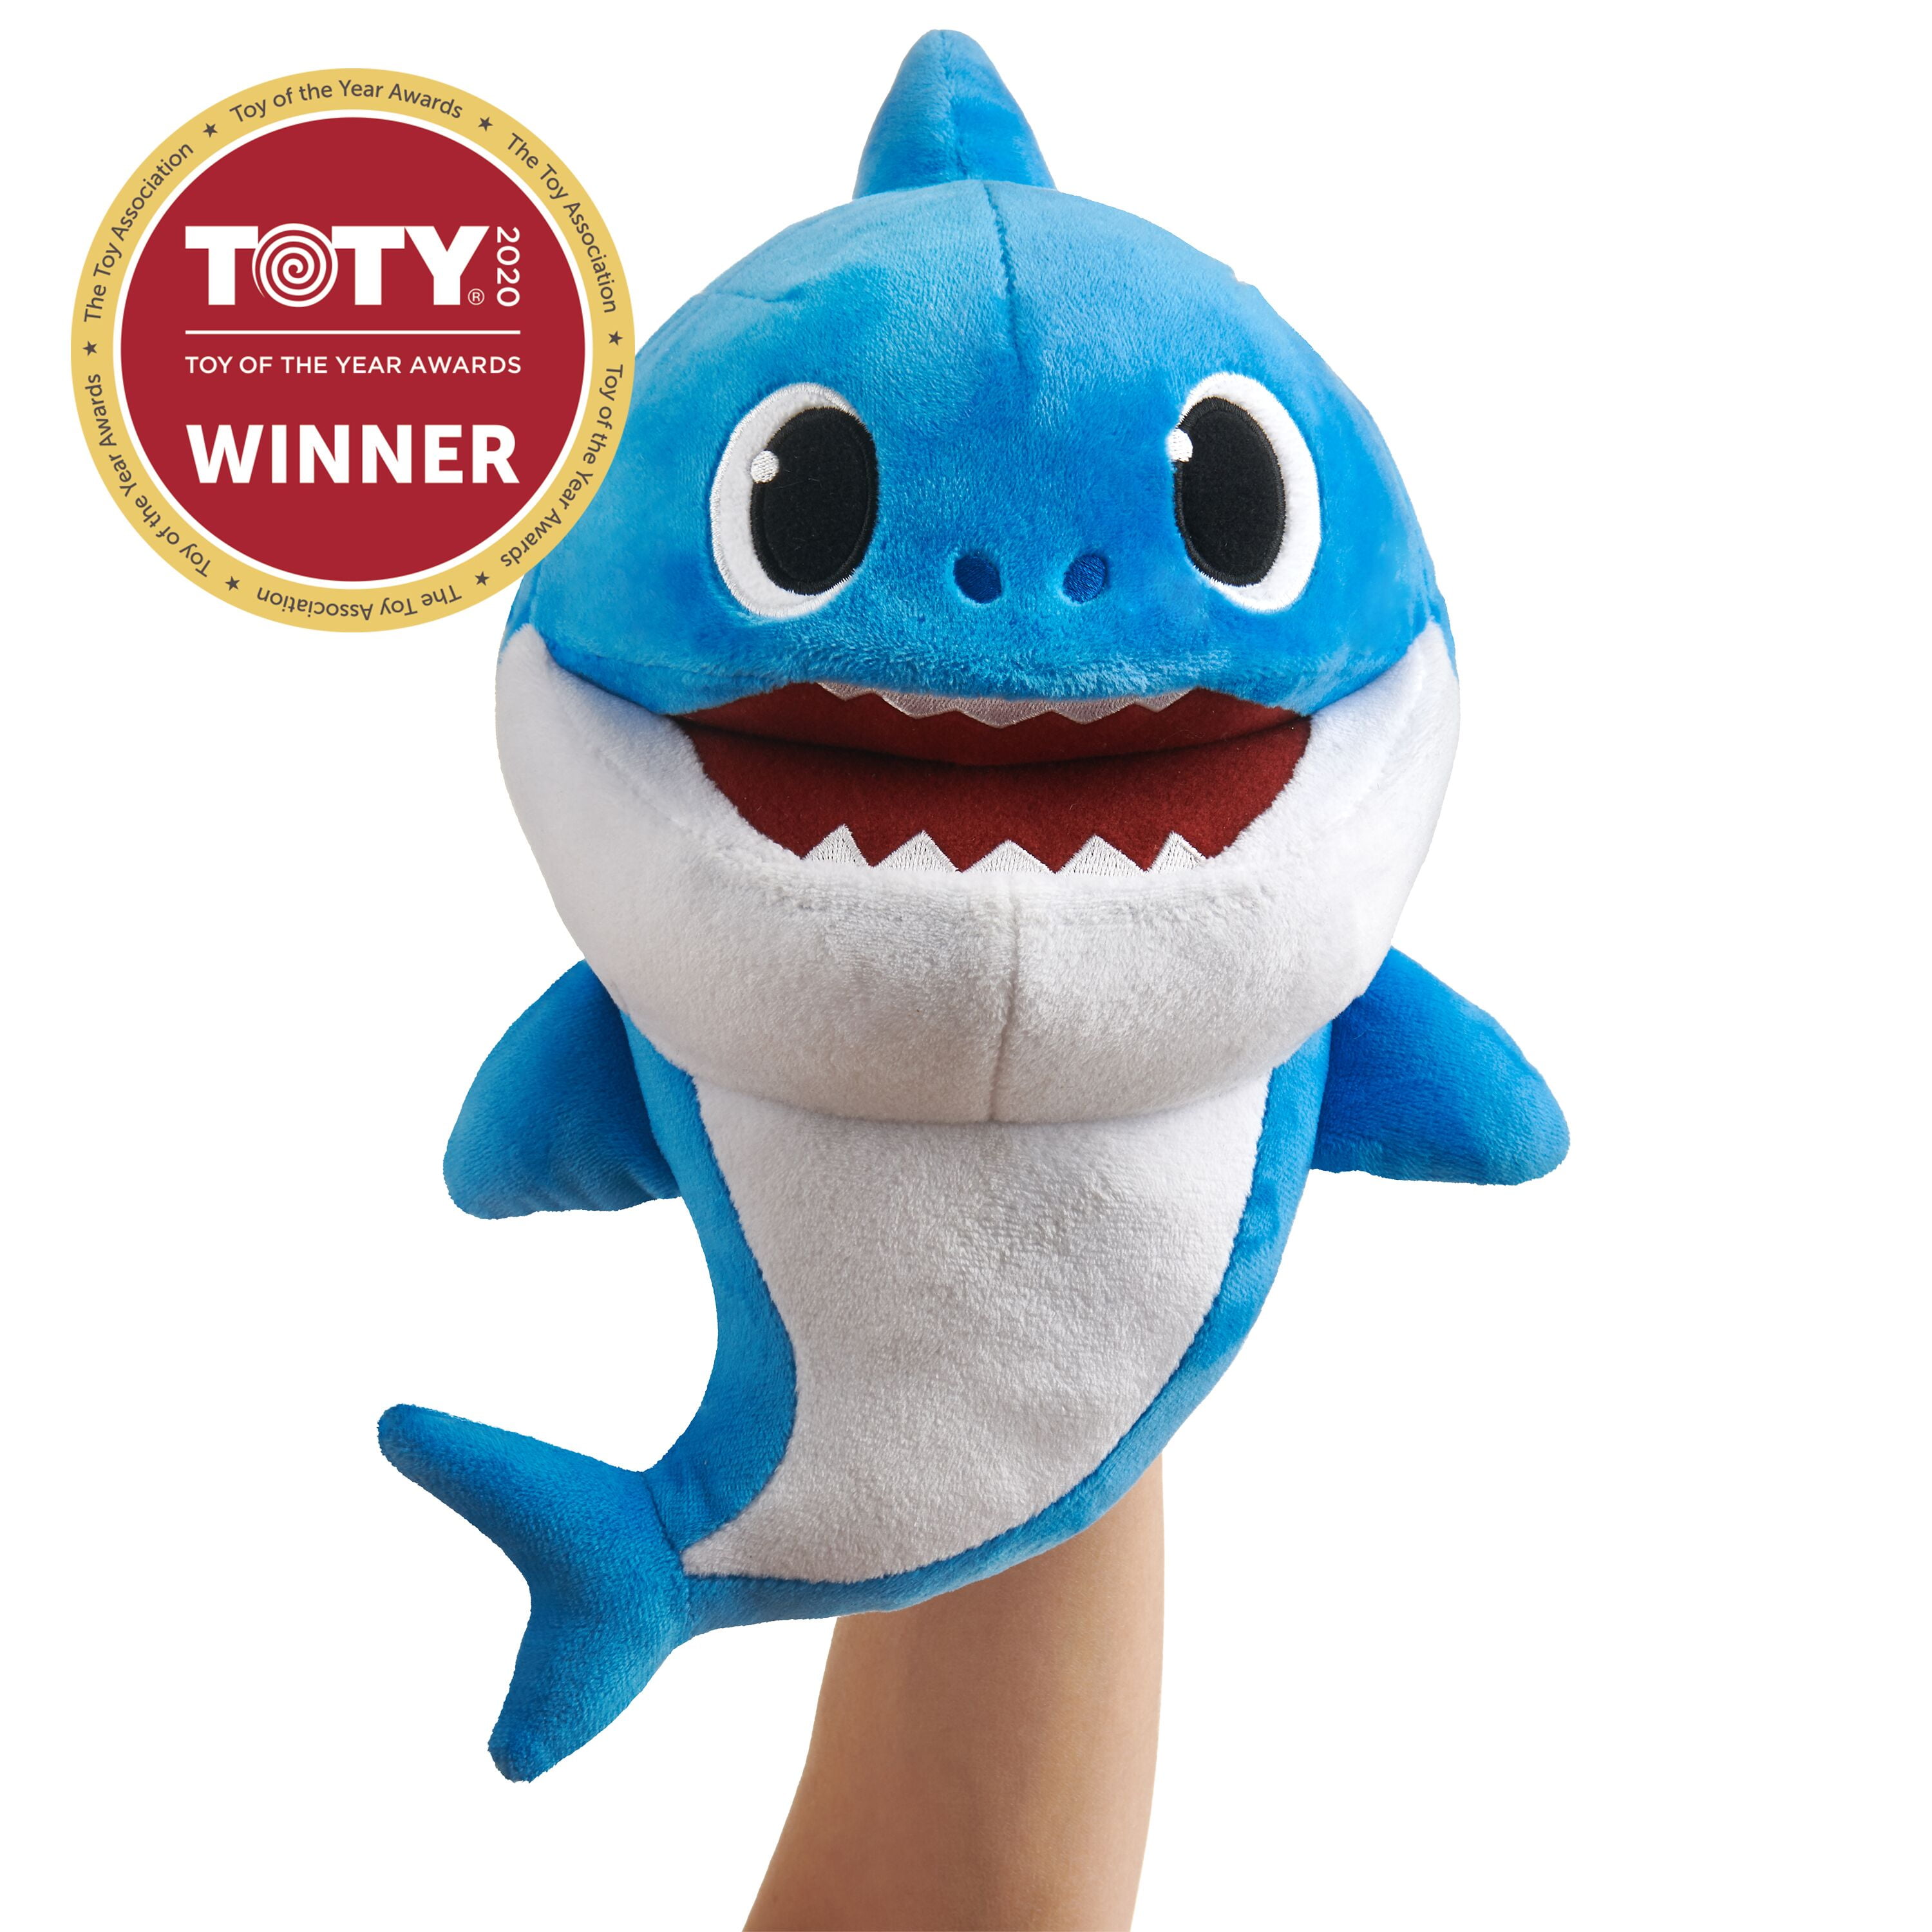 baby shark toy walmart